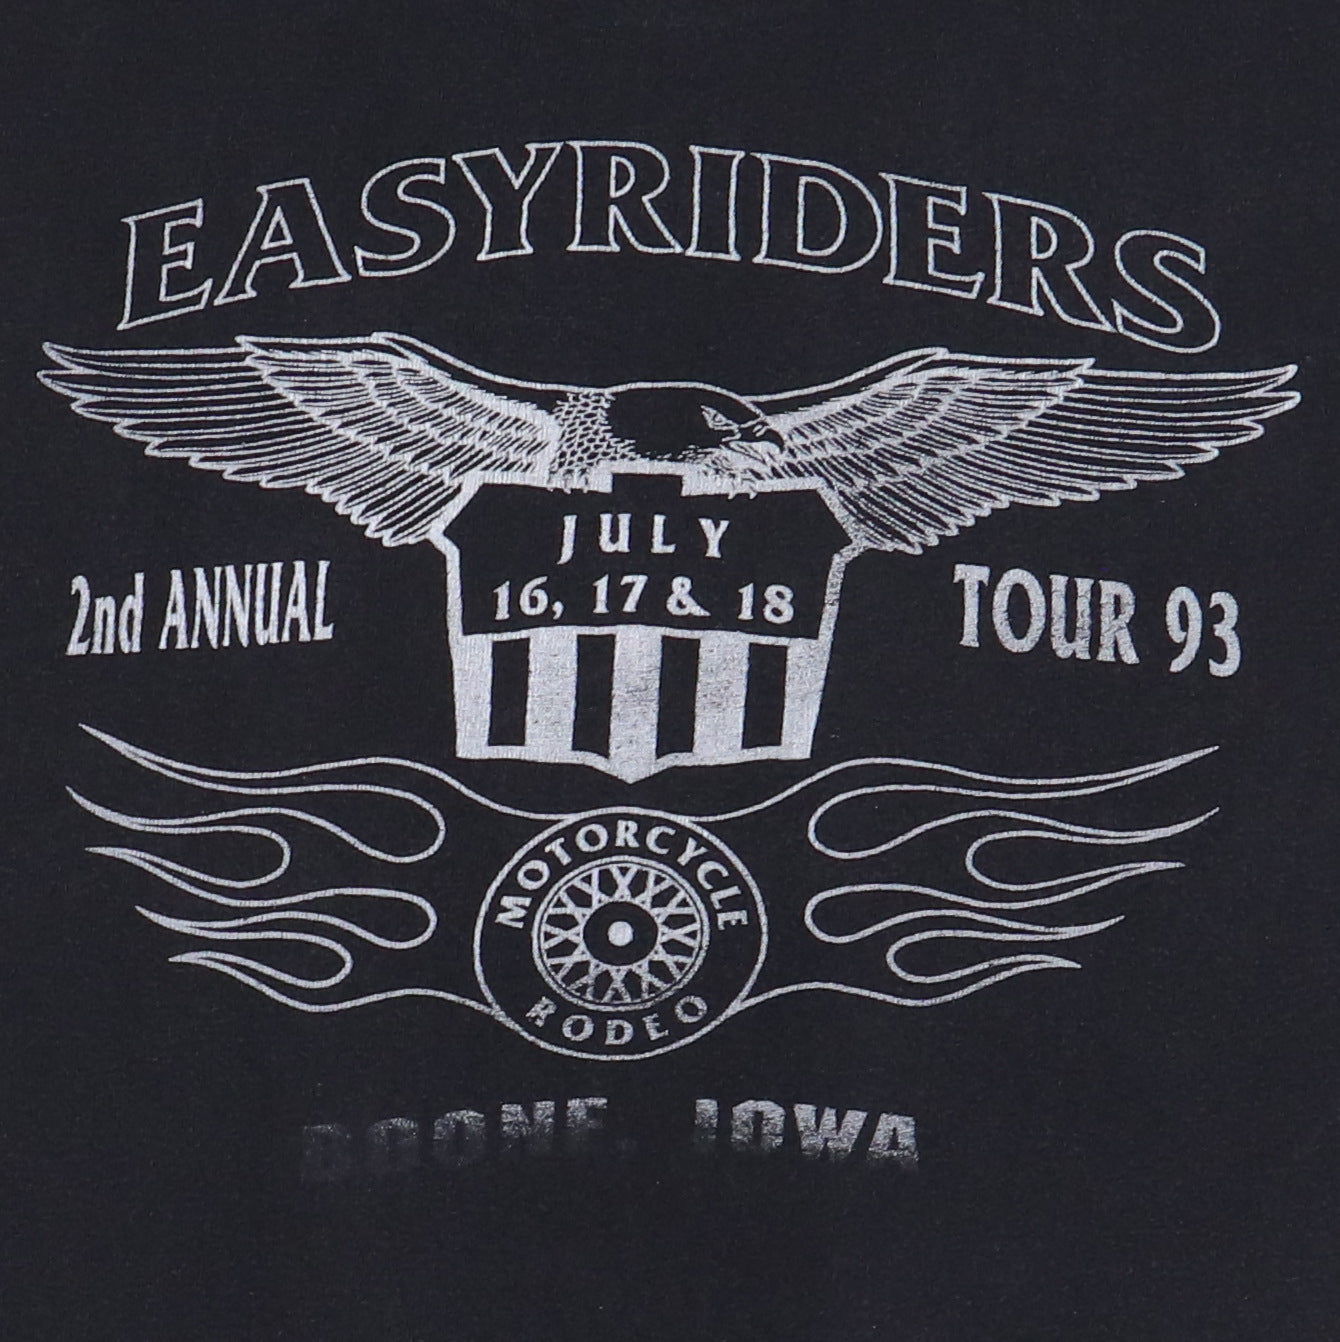 1988 Harley Davidson One Hot Piece Shirt